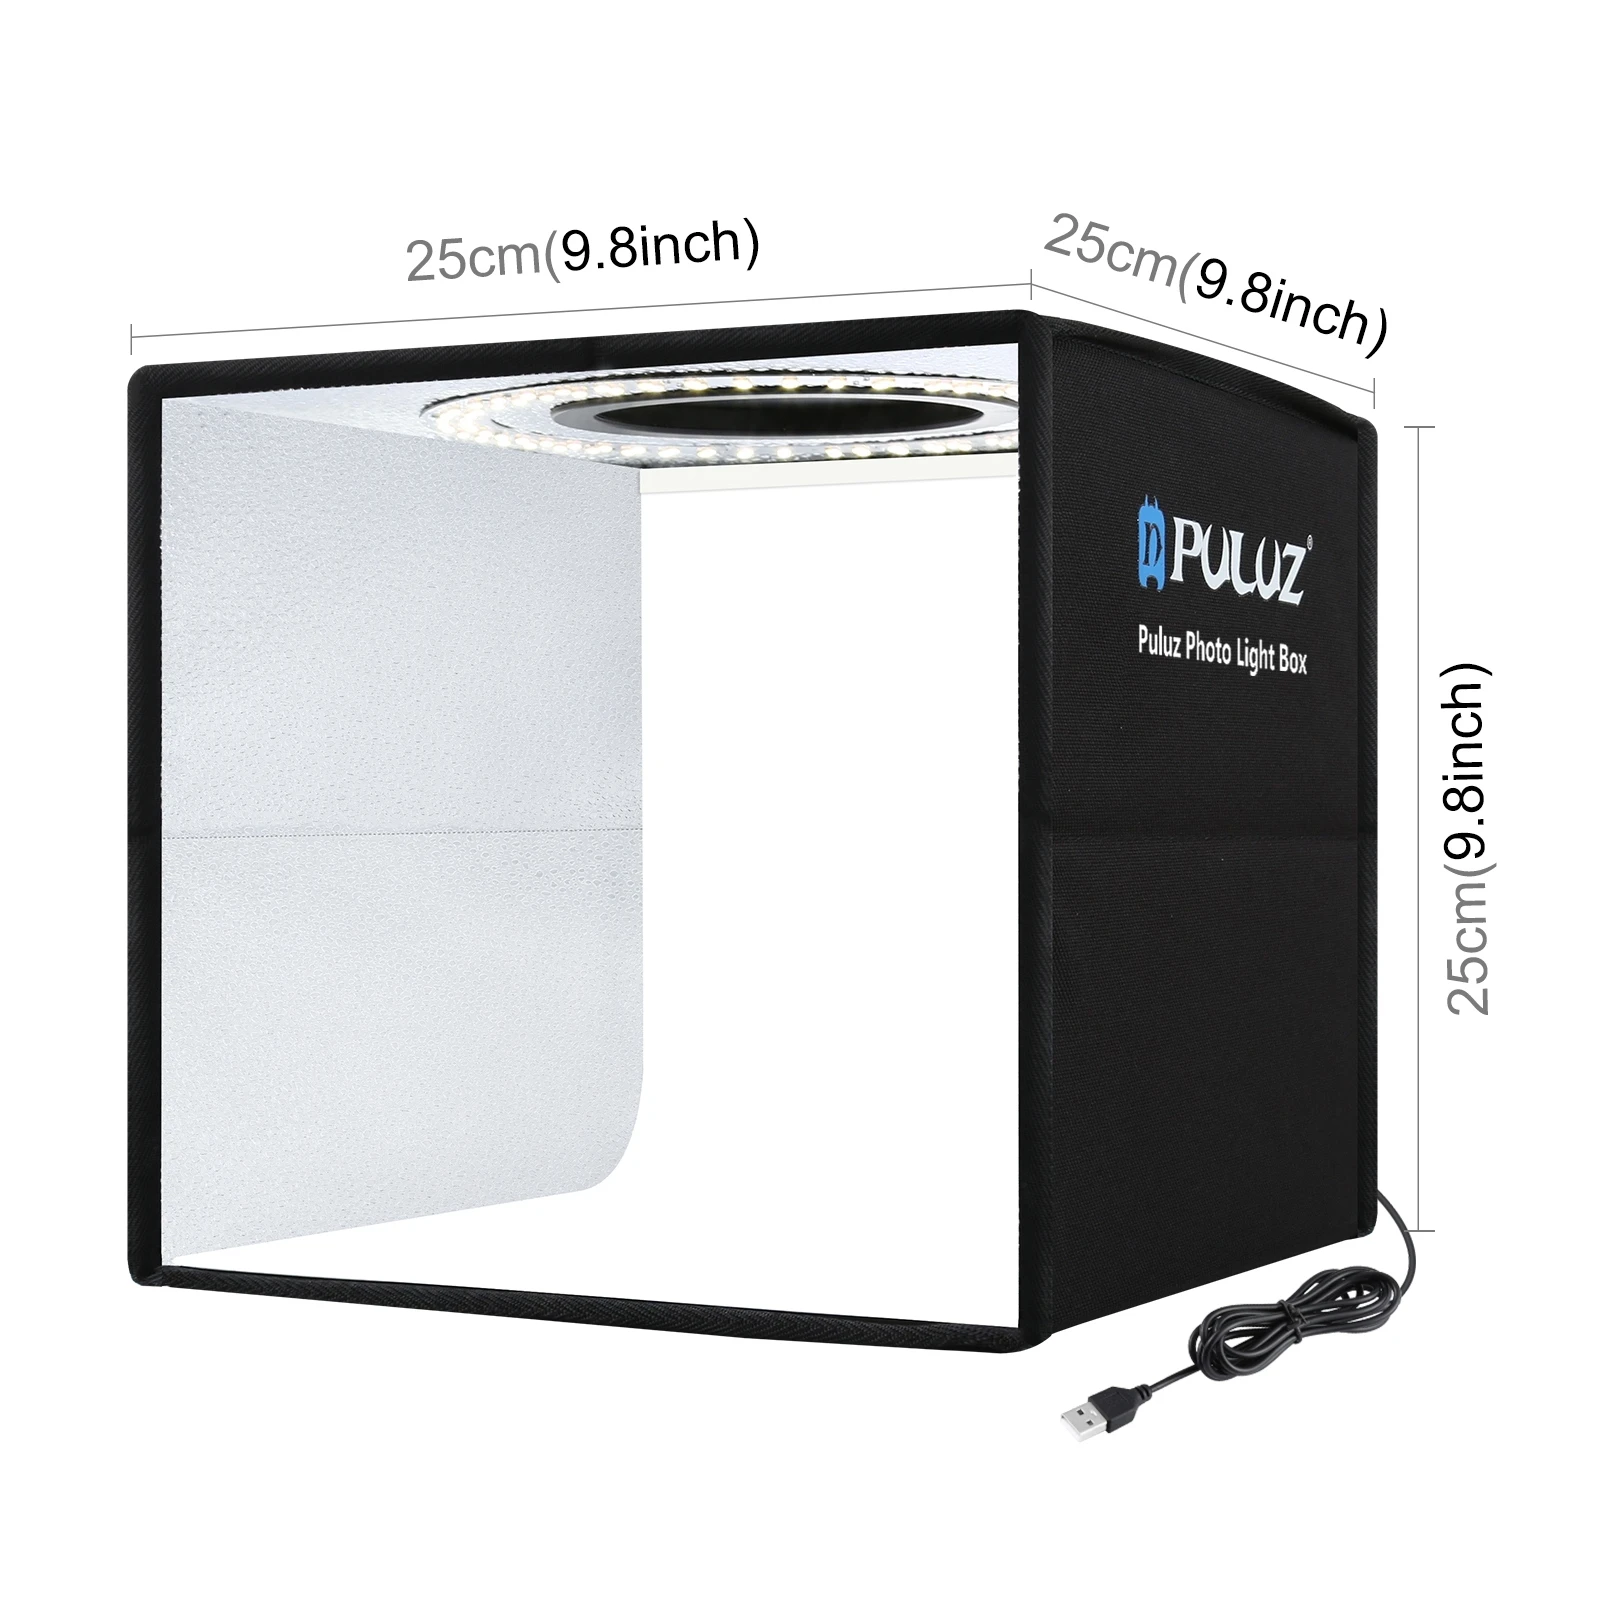 

Professional PULUZ 25cm Folding Portable High 97 CRI Ring Light Photo Lighting Studio Shooting Tent Box with 12 Colors Backdrops